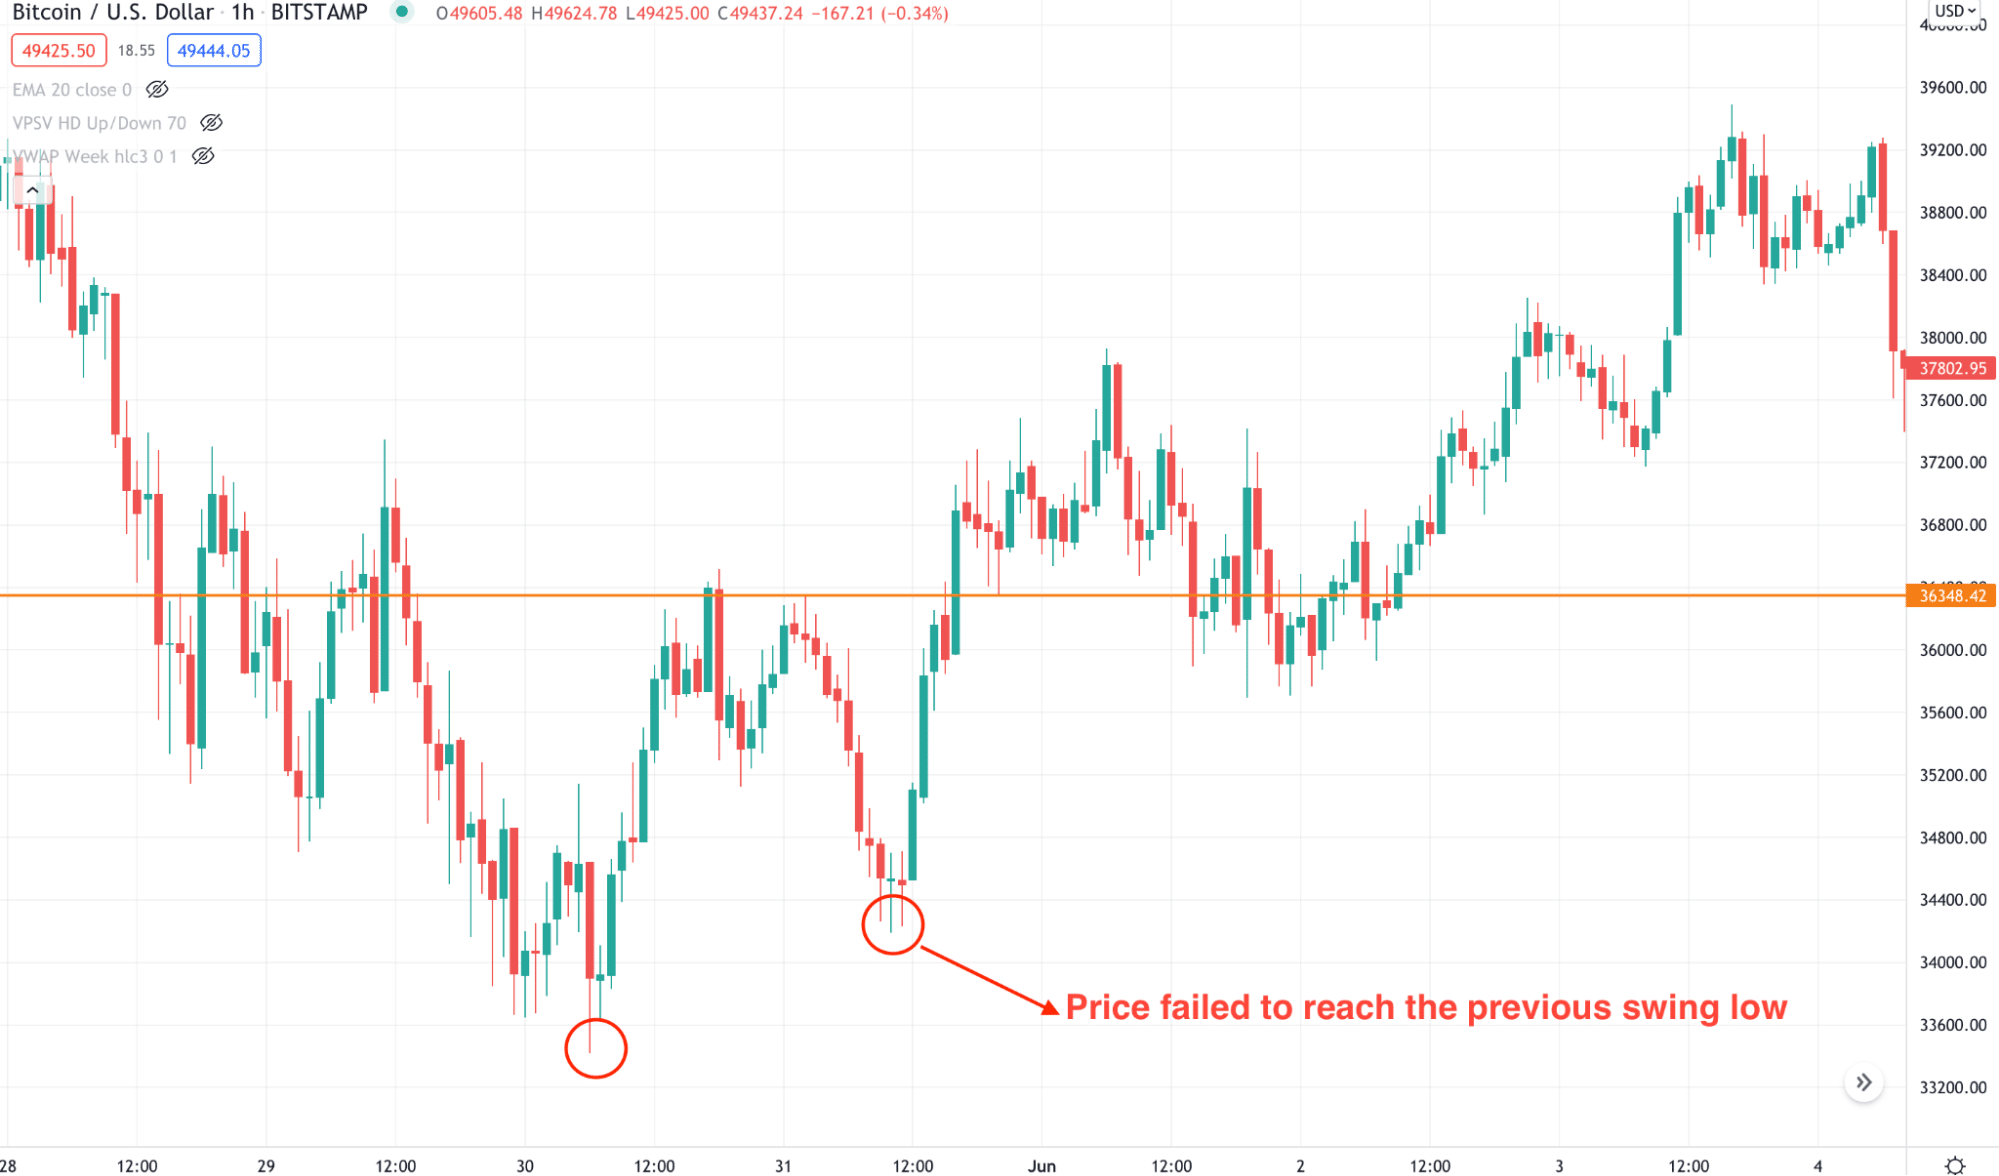 BTC/USD failure swing trading crypto chart pattern